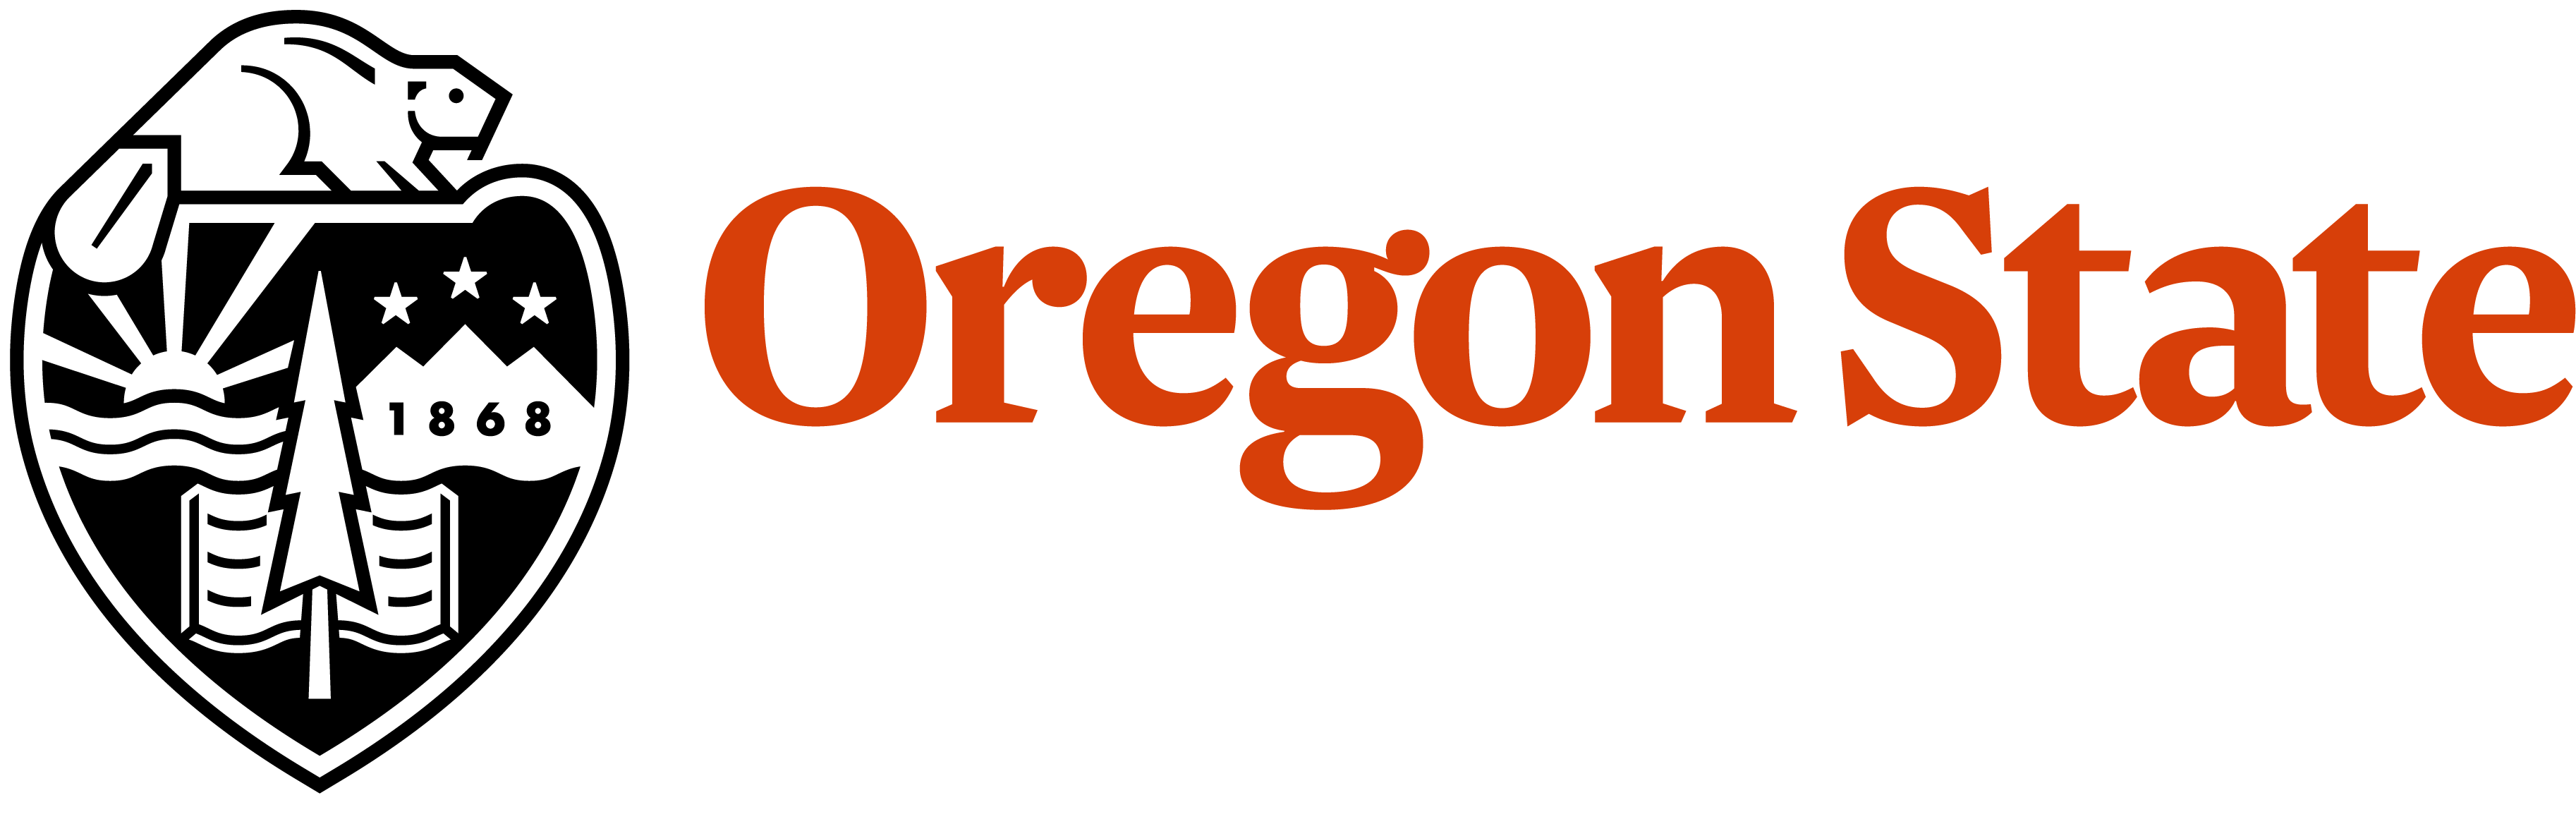 Oregon State University home